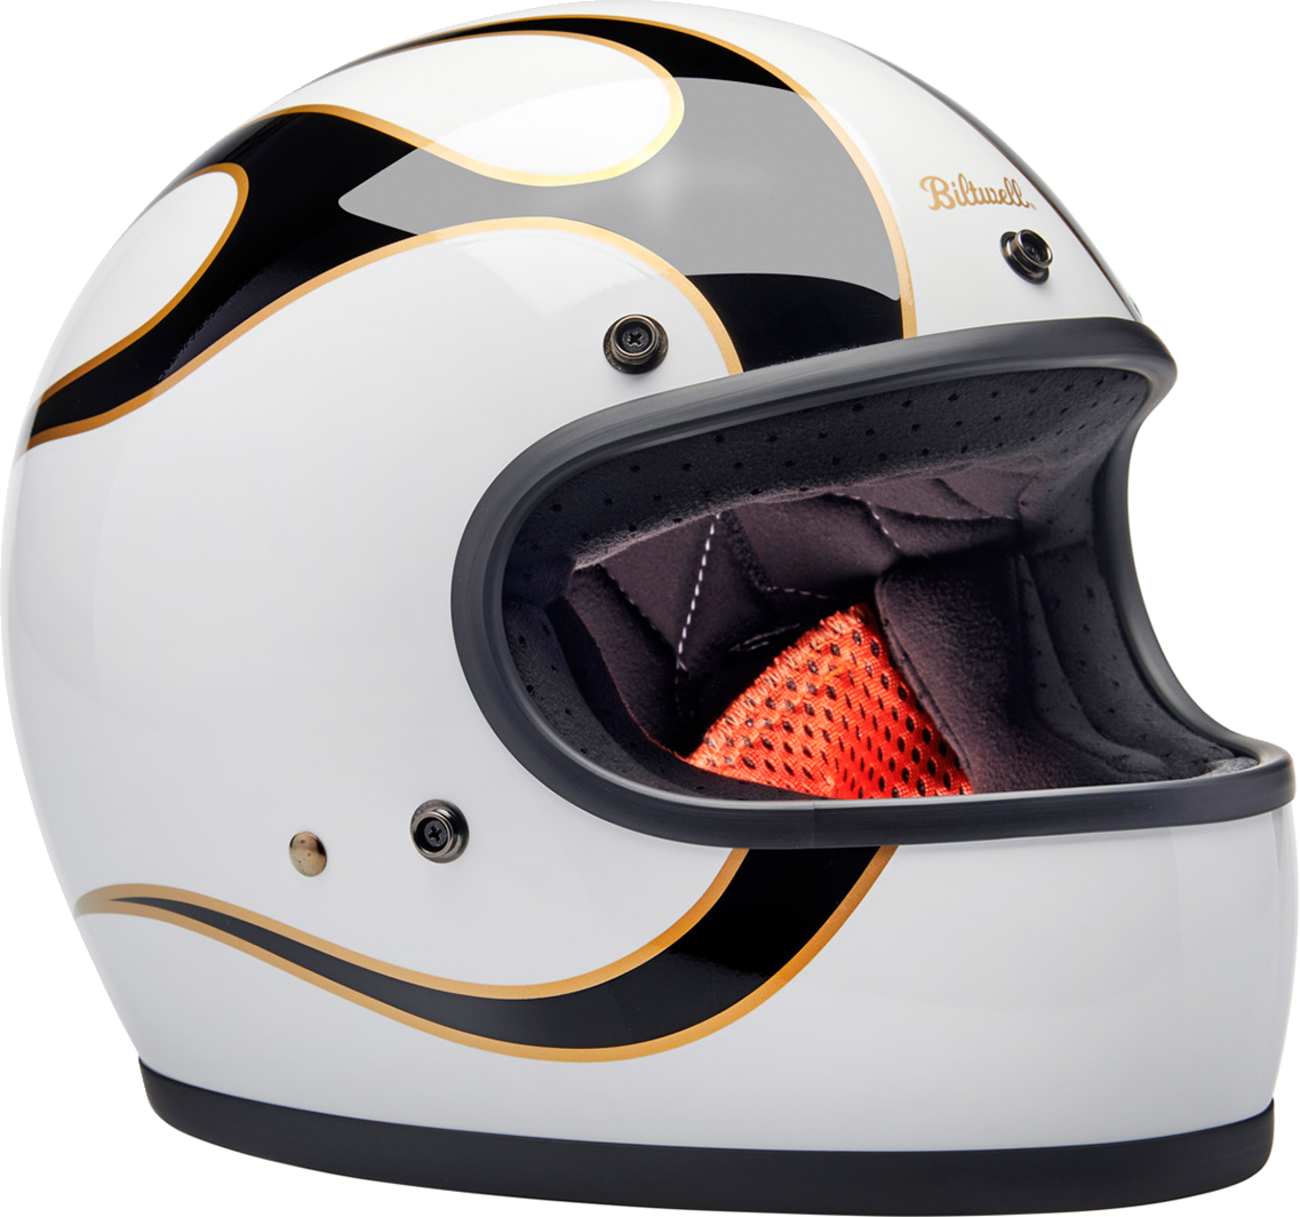 BILTWELL Gringo Helmet - Flames - White/Black - XL 1002-561-505